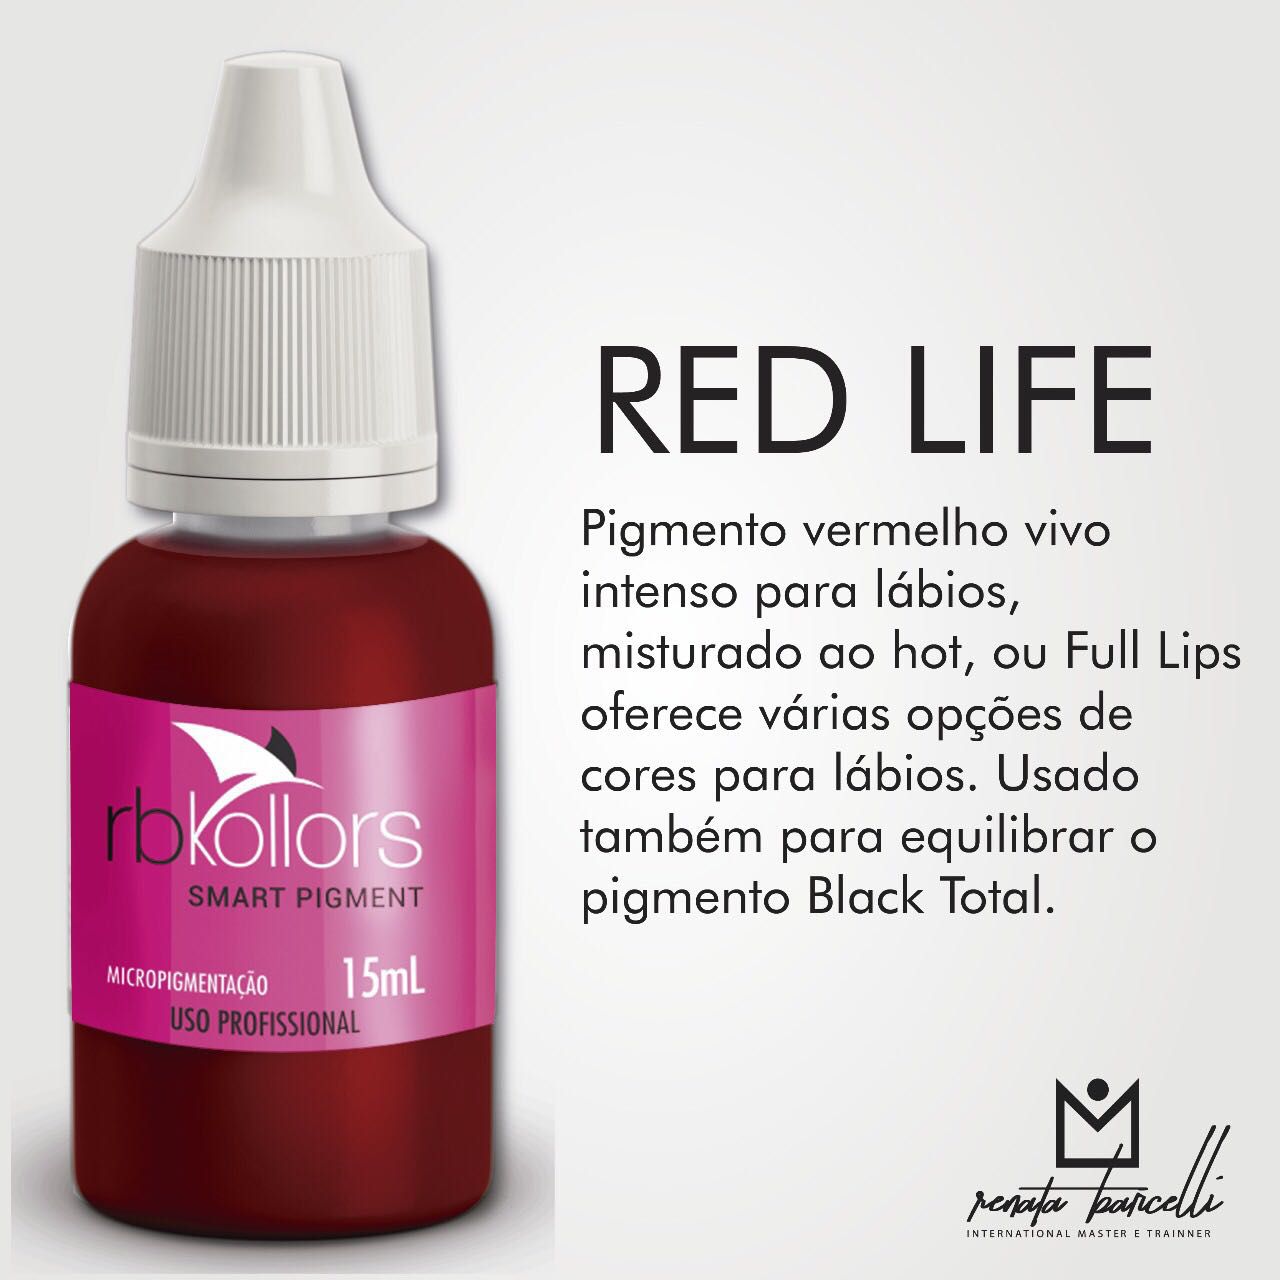 Pigmento RB Kollors - Red Life 15 ml